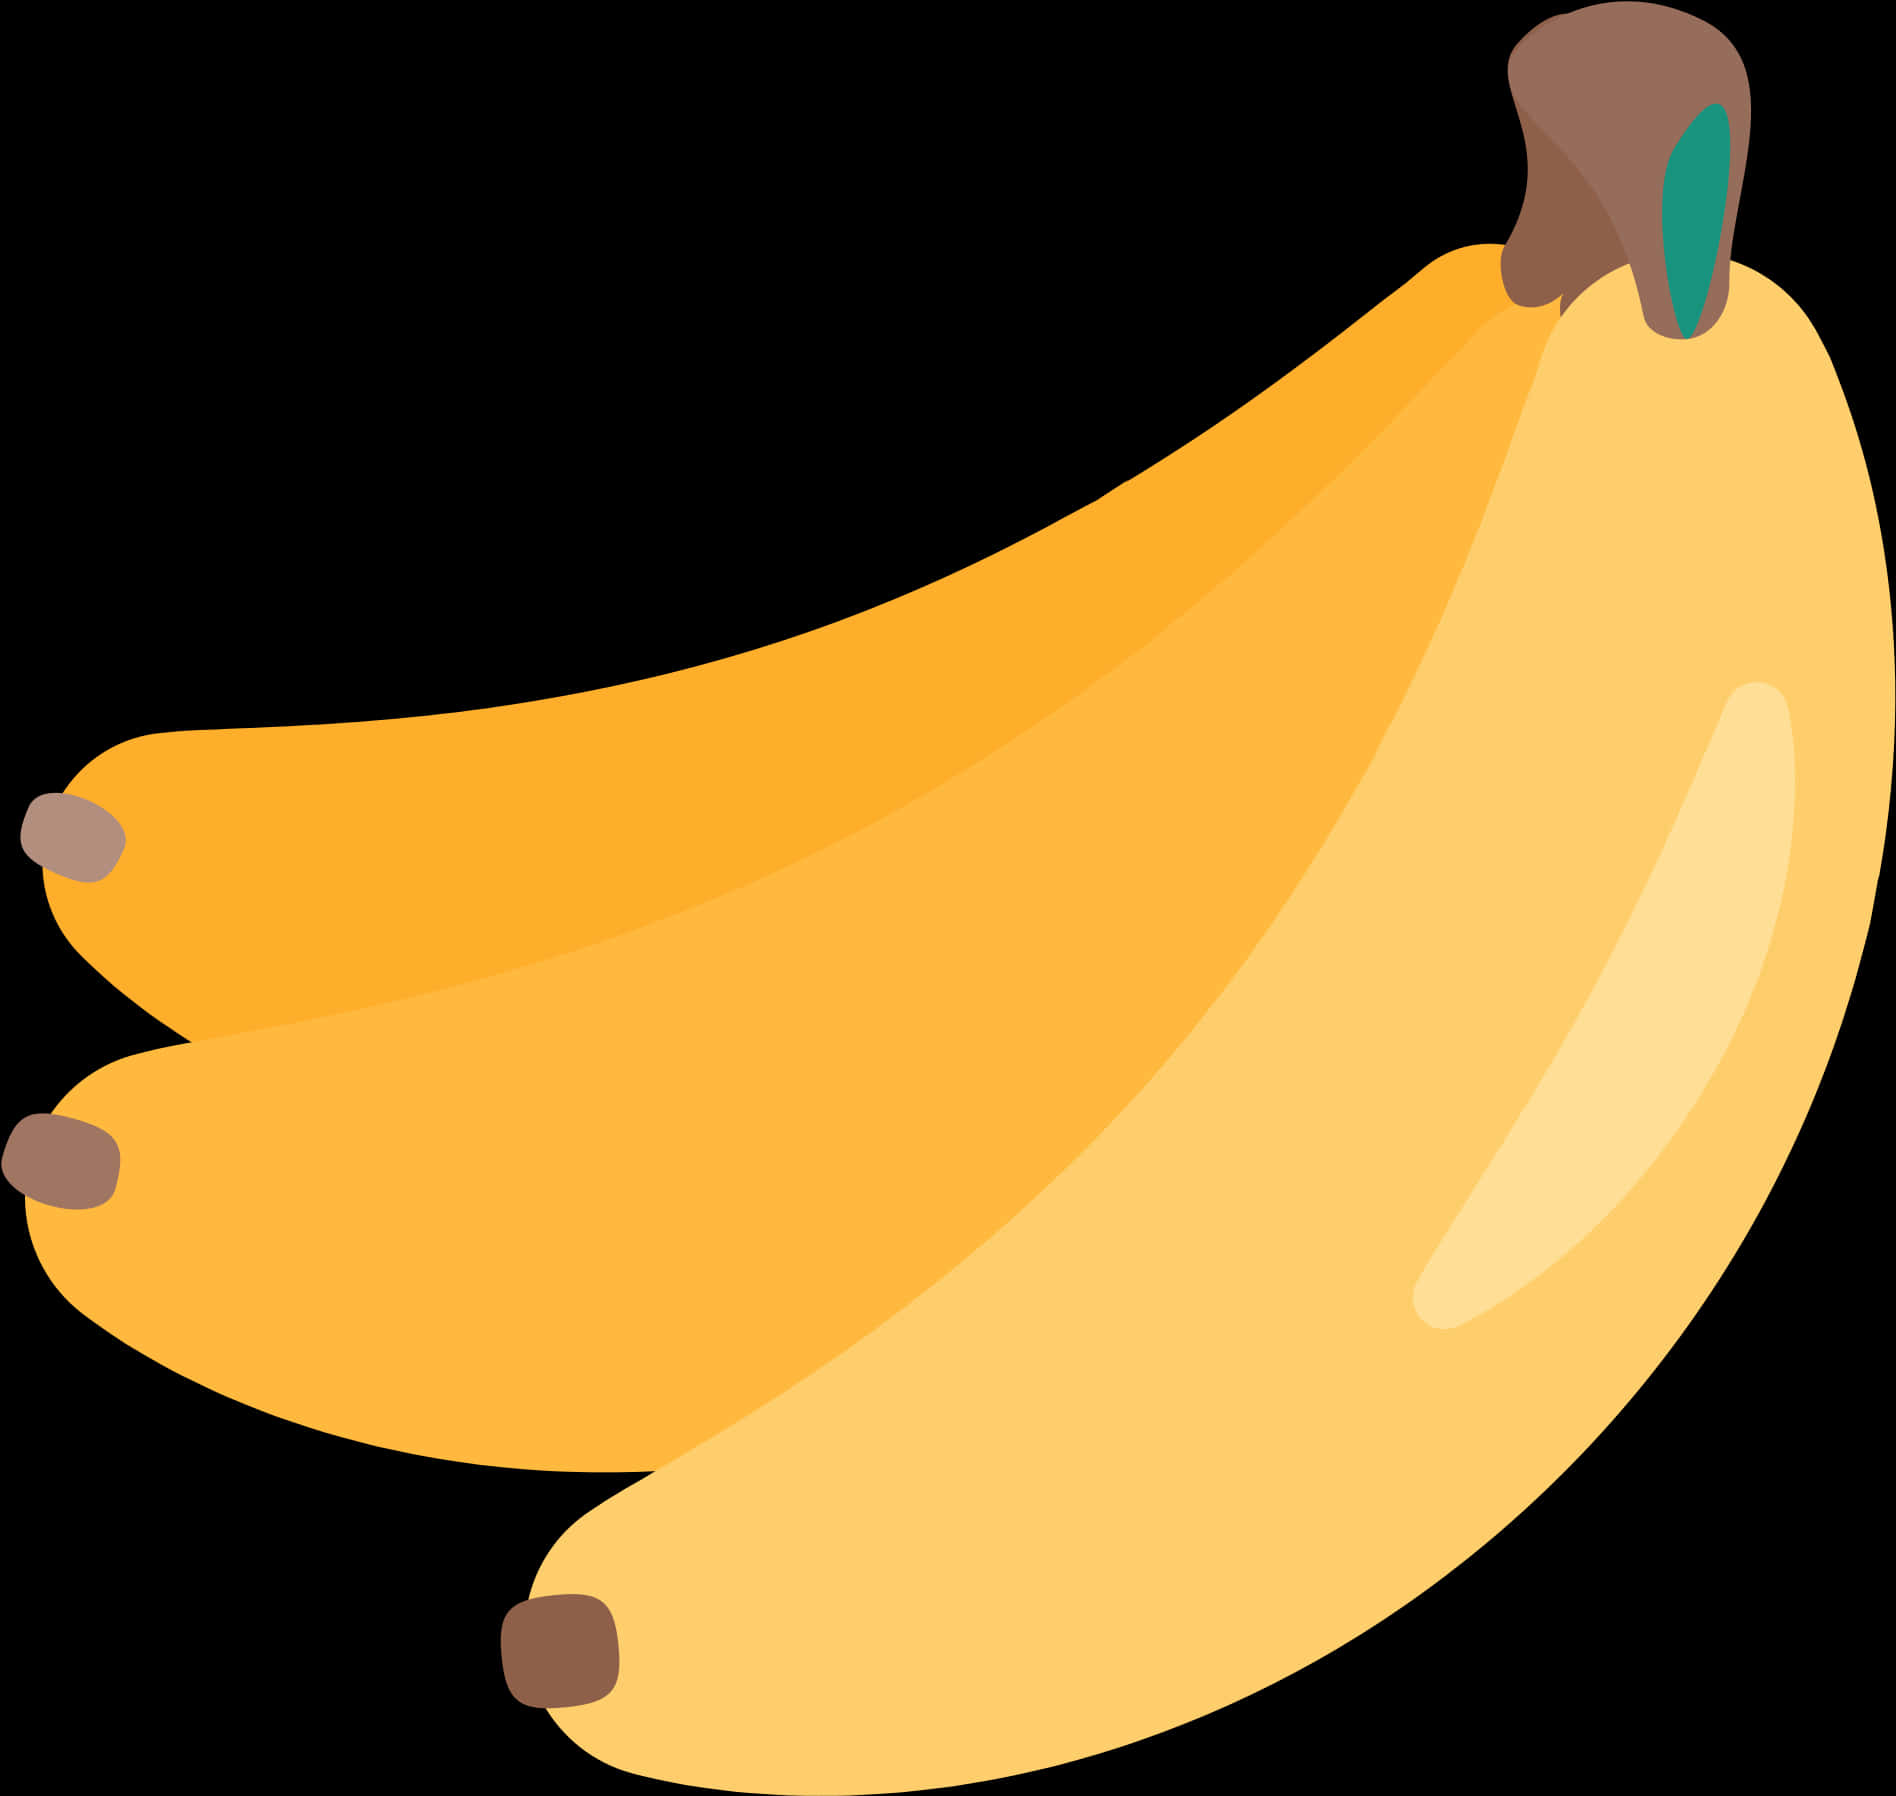 Clusterof Bananas Illustration PNG image